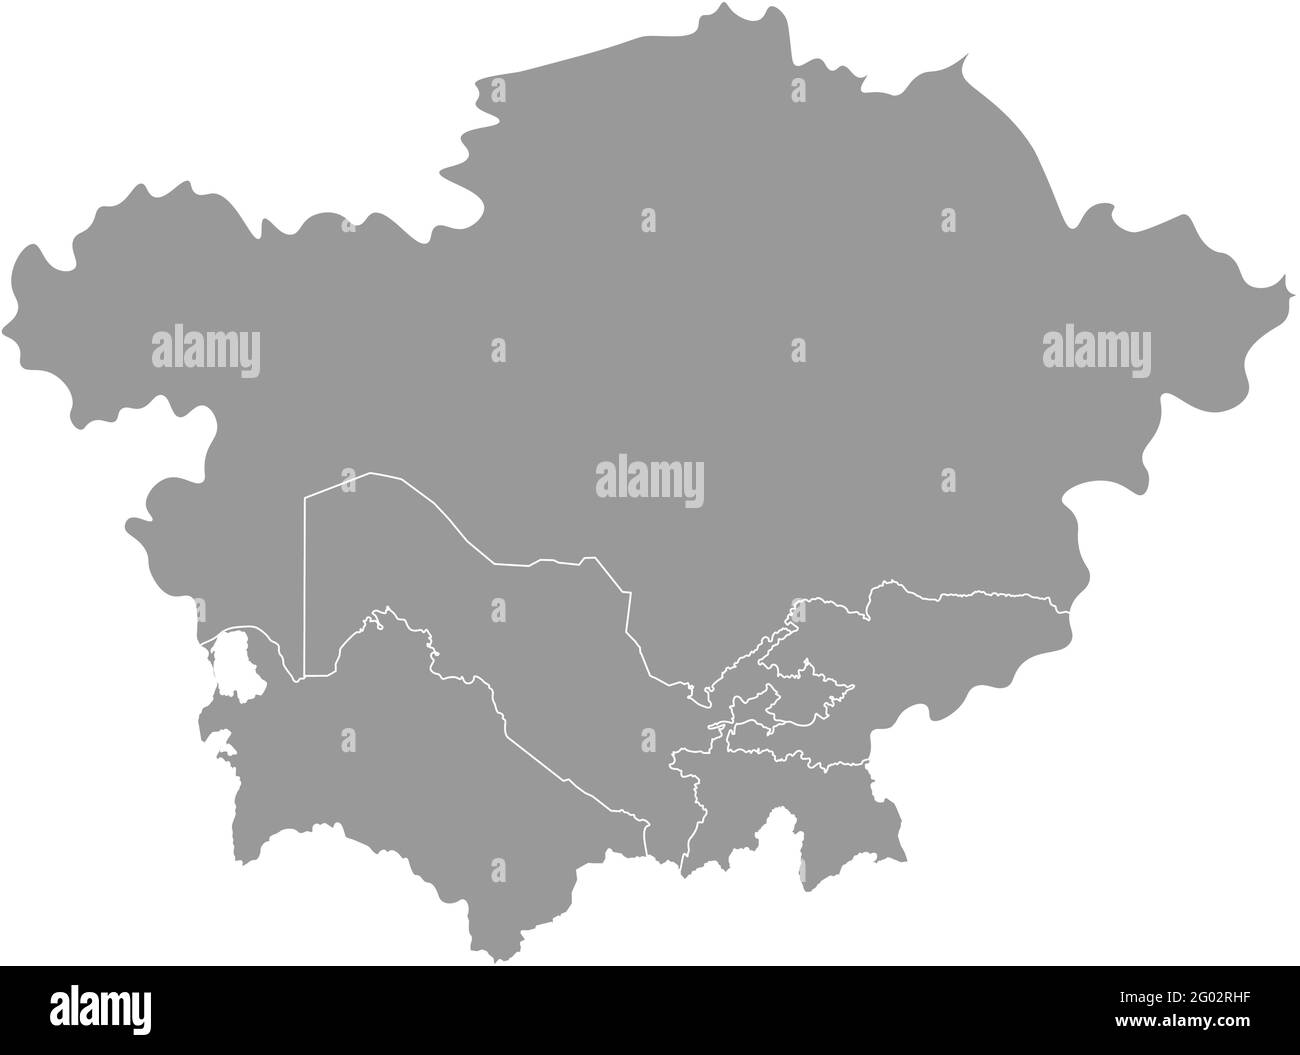 Illustrazione vettoriale con mappa semplificata dei paesi asiatici. Regione centrale (Kazakistan, Tagikistan, Kirghizistan, Turkmenistan, Uzbekistan Illustrazione Vettoriale